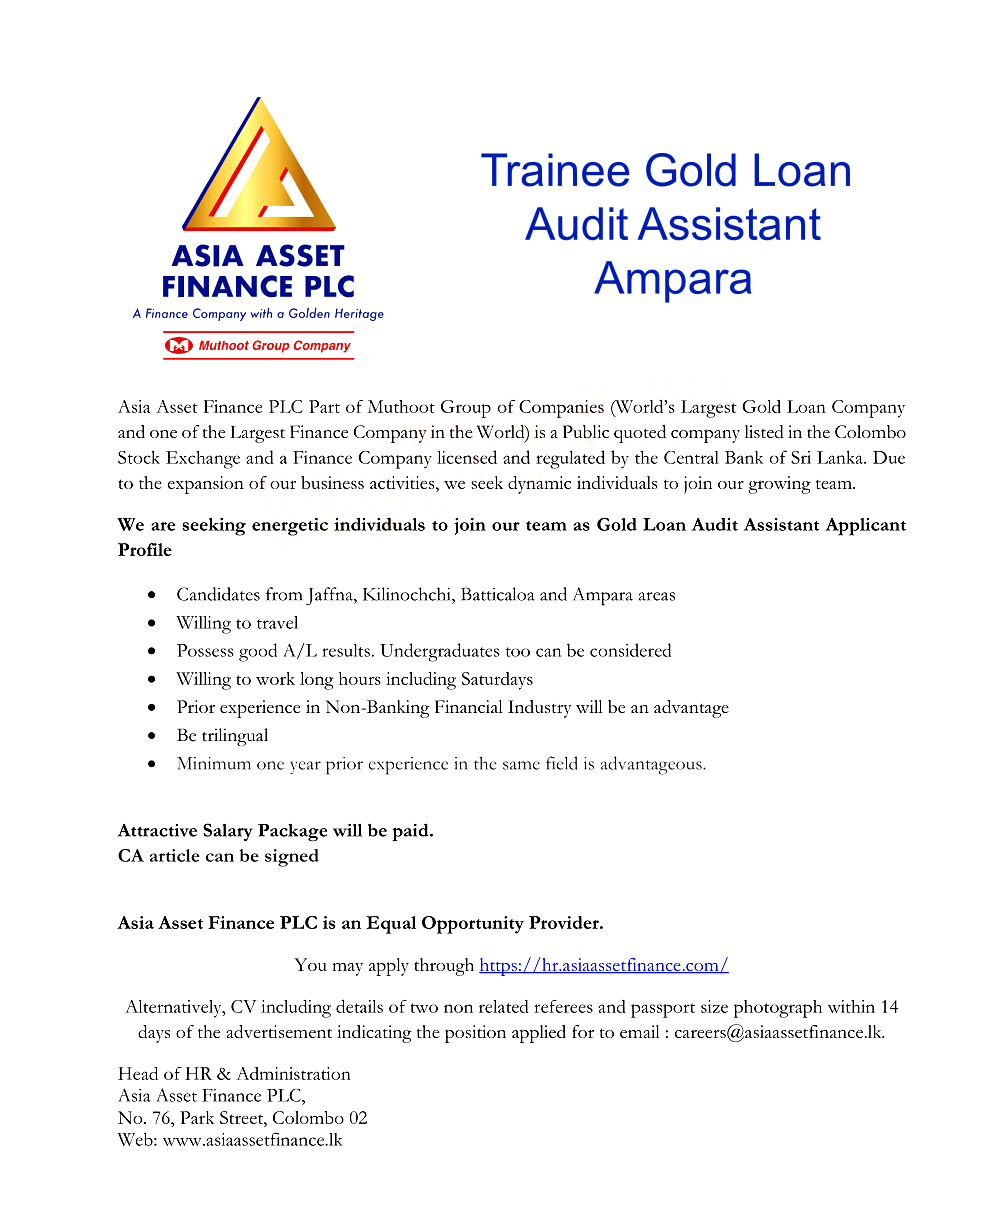 Trainee Gold Loan Audit Assistant Vacancy – Ampara Asia Asset Finance Jobs Vacancies Details